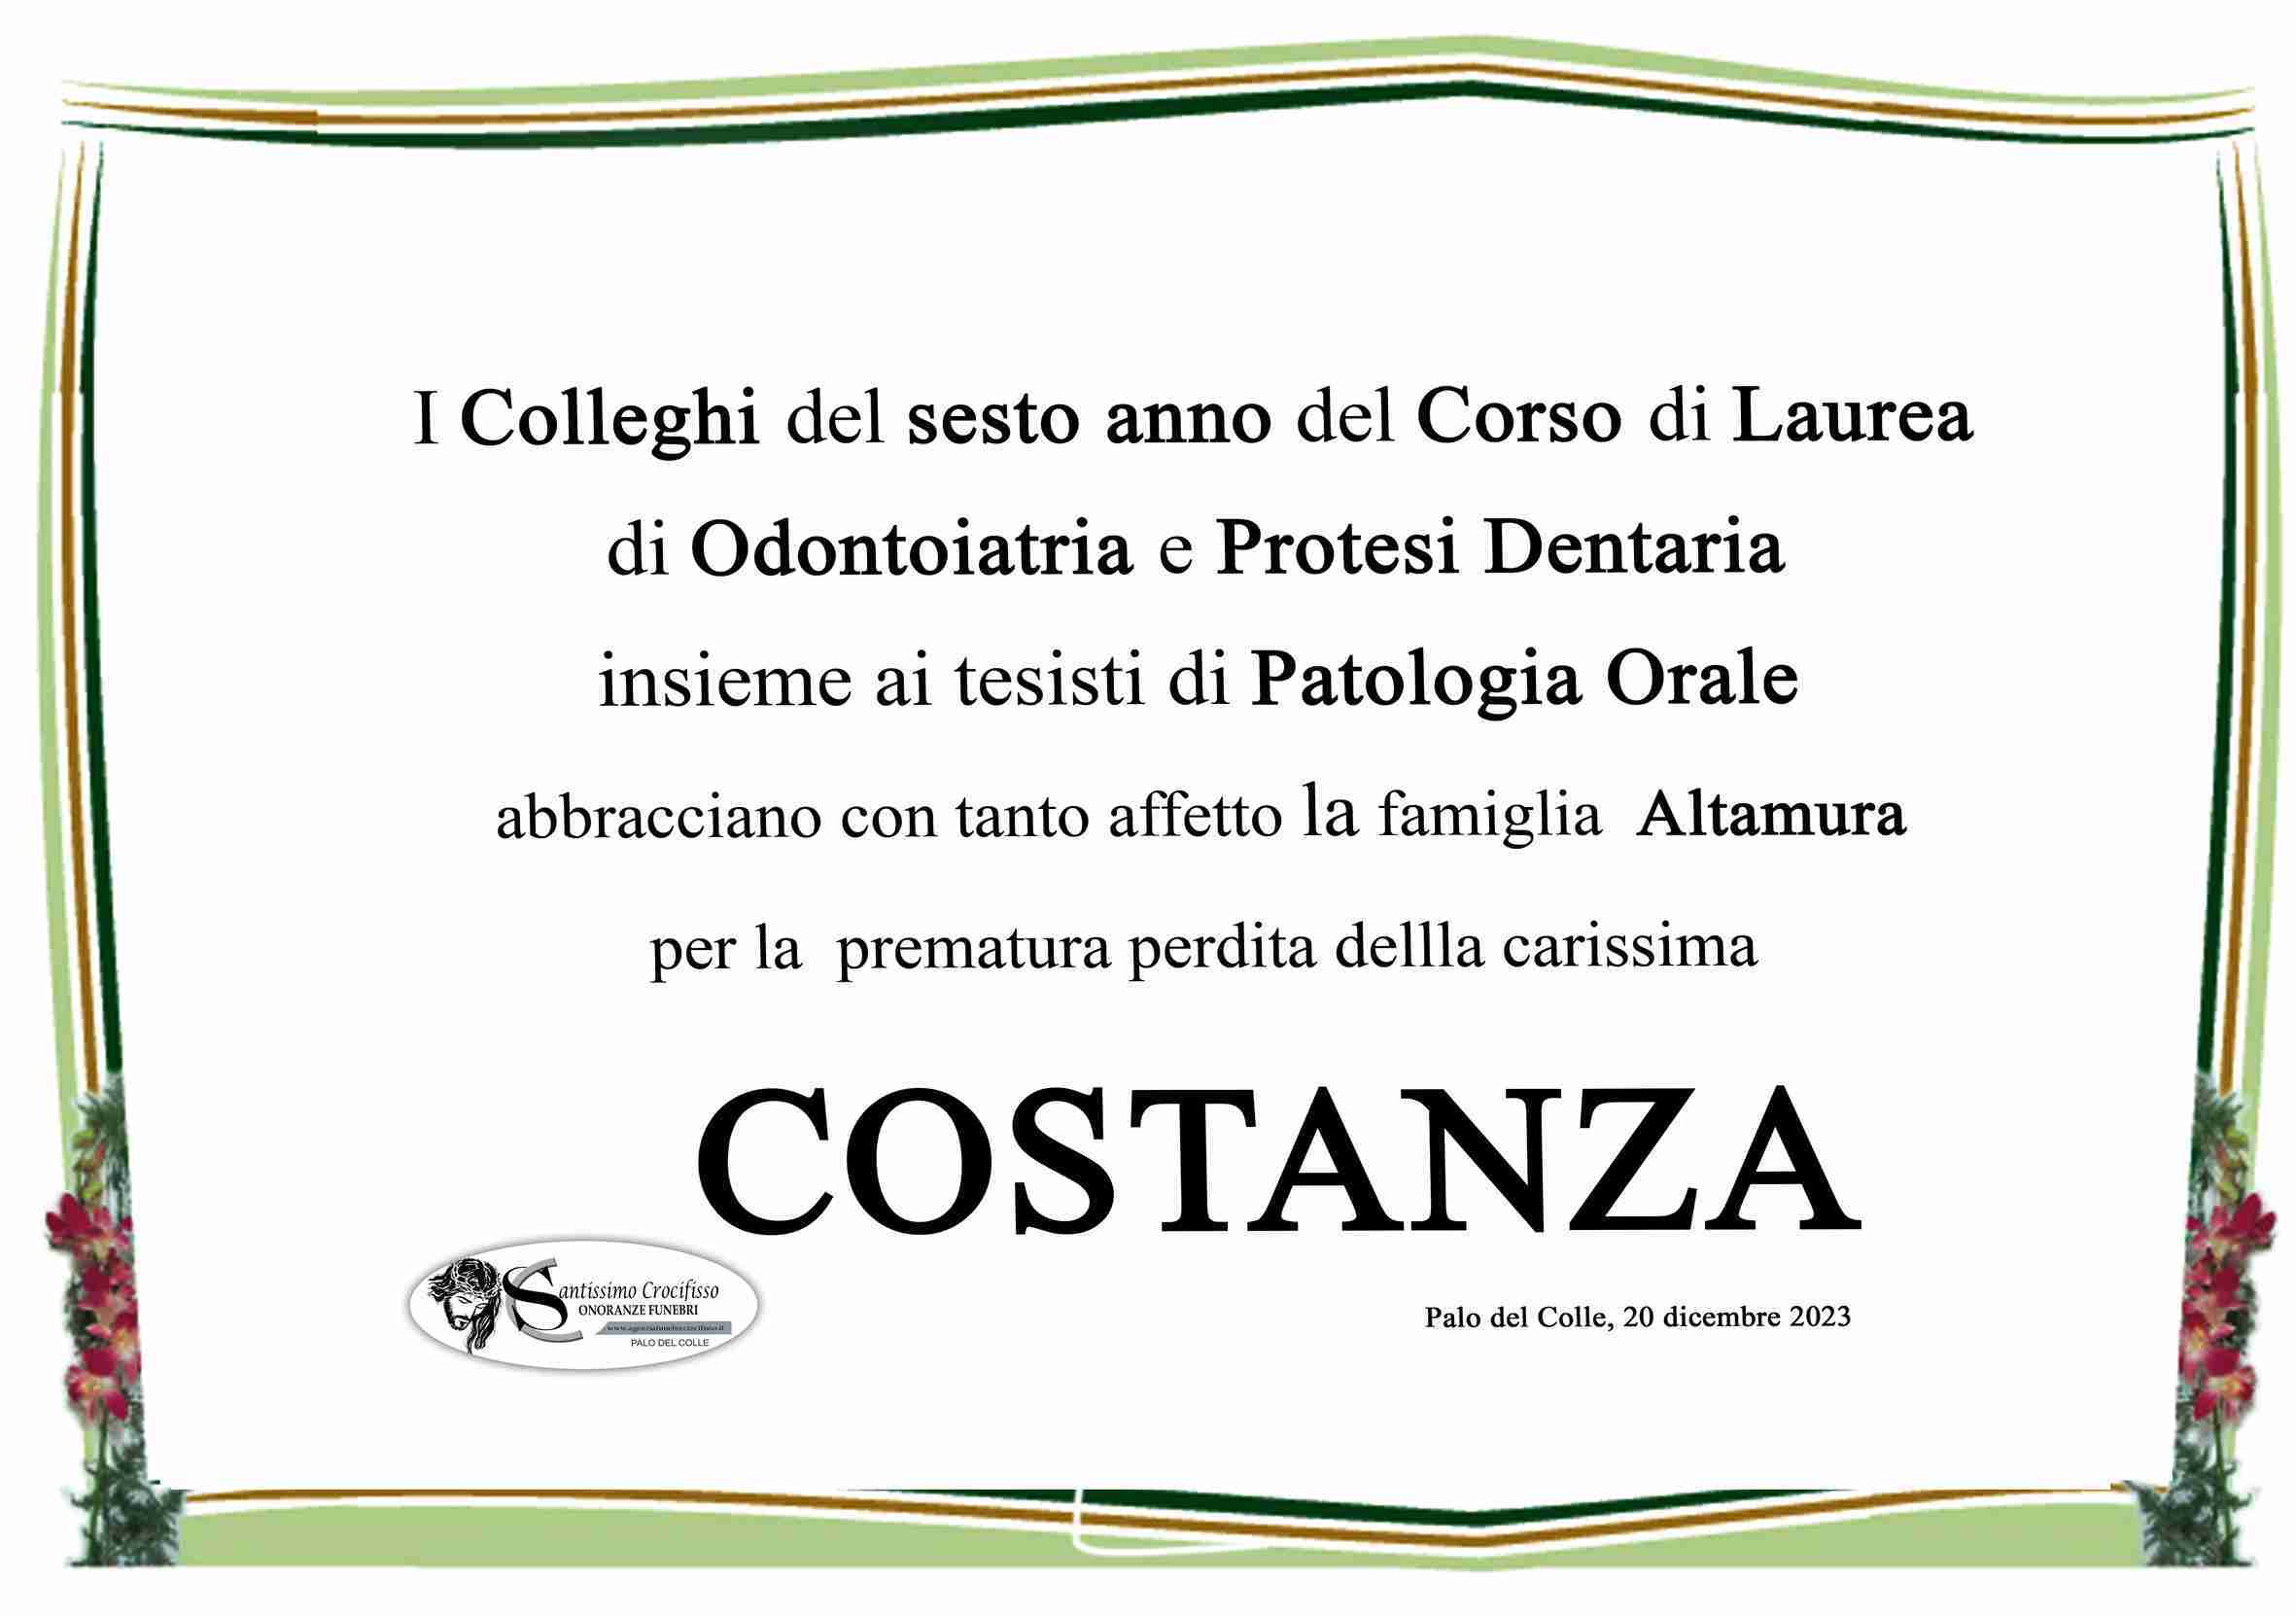 Costanza Altamura